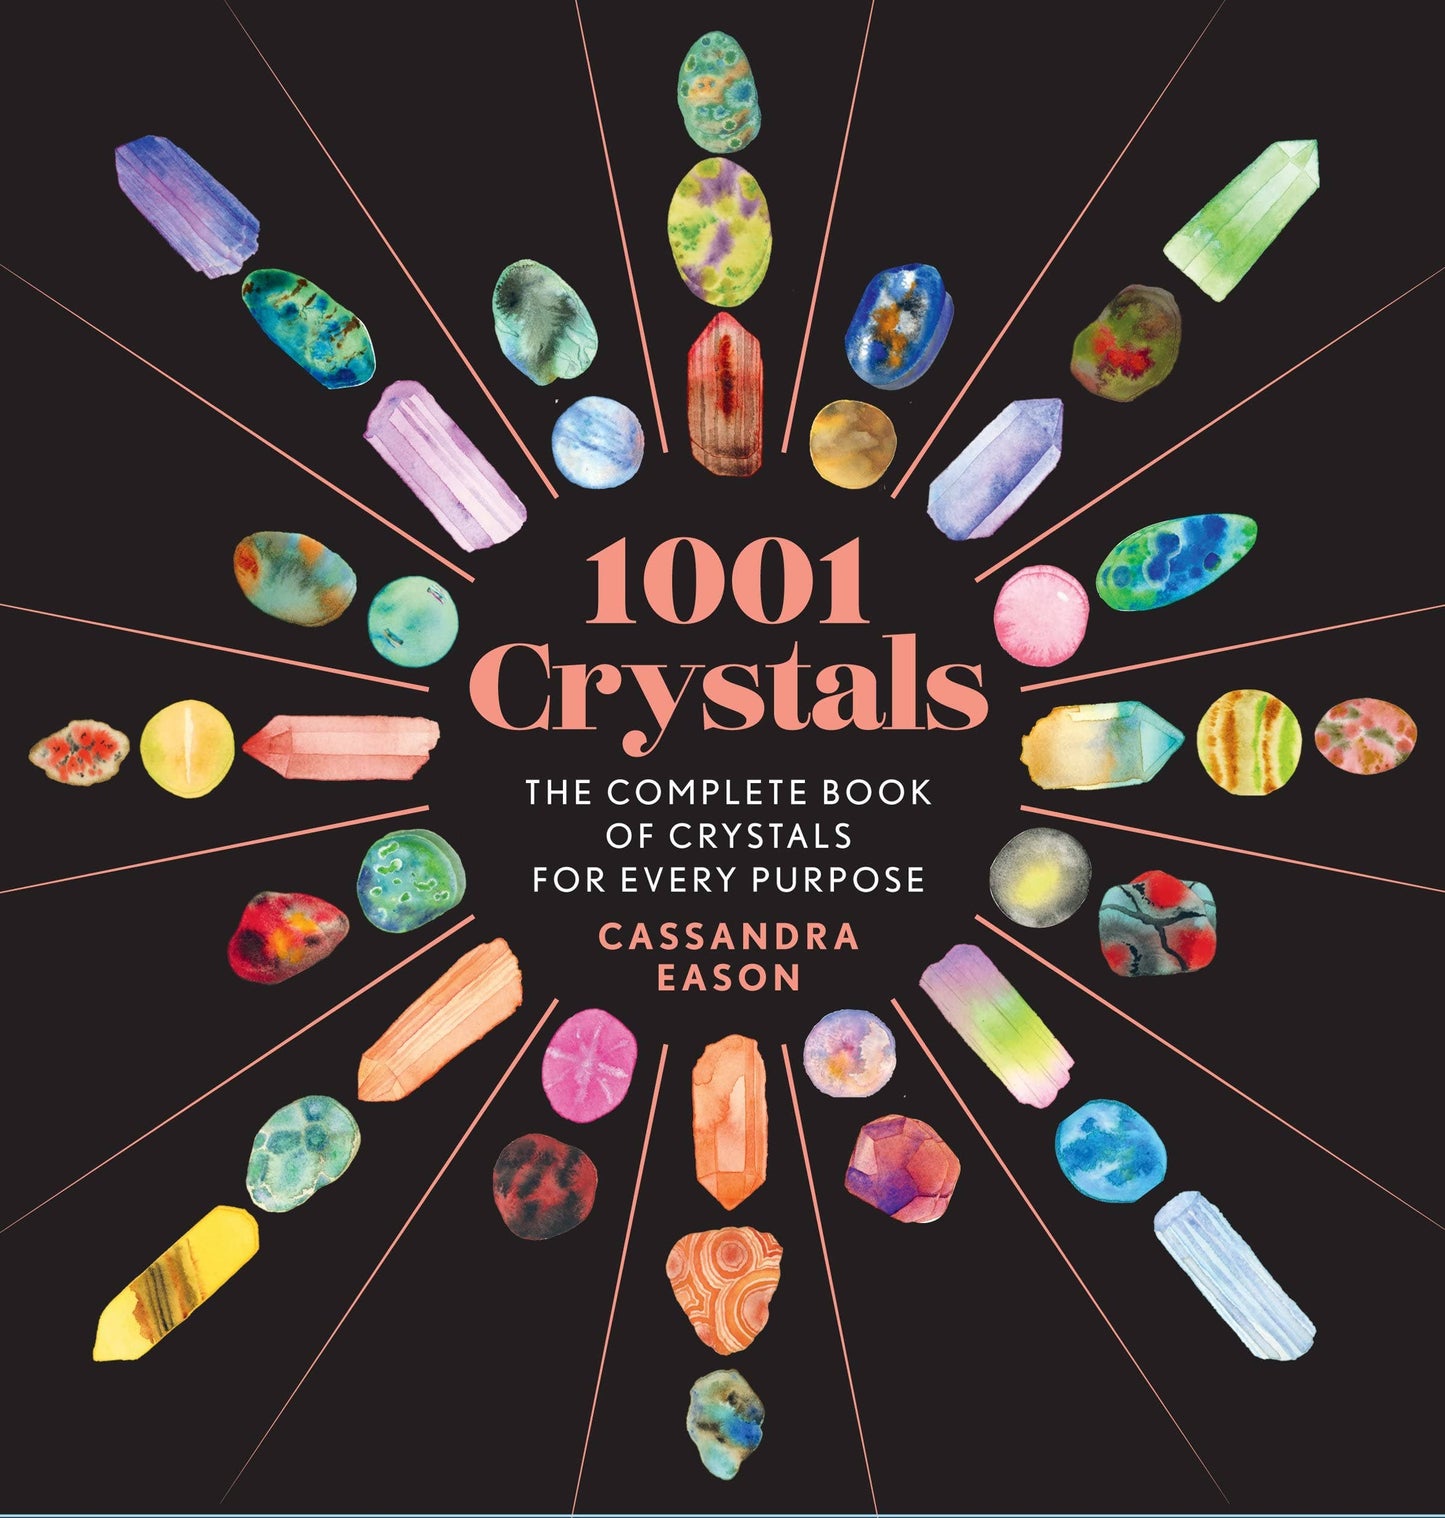 1001 Crystals by Cassandra Eason